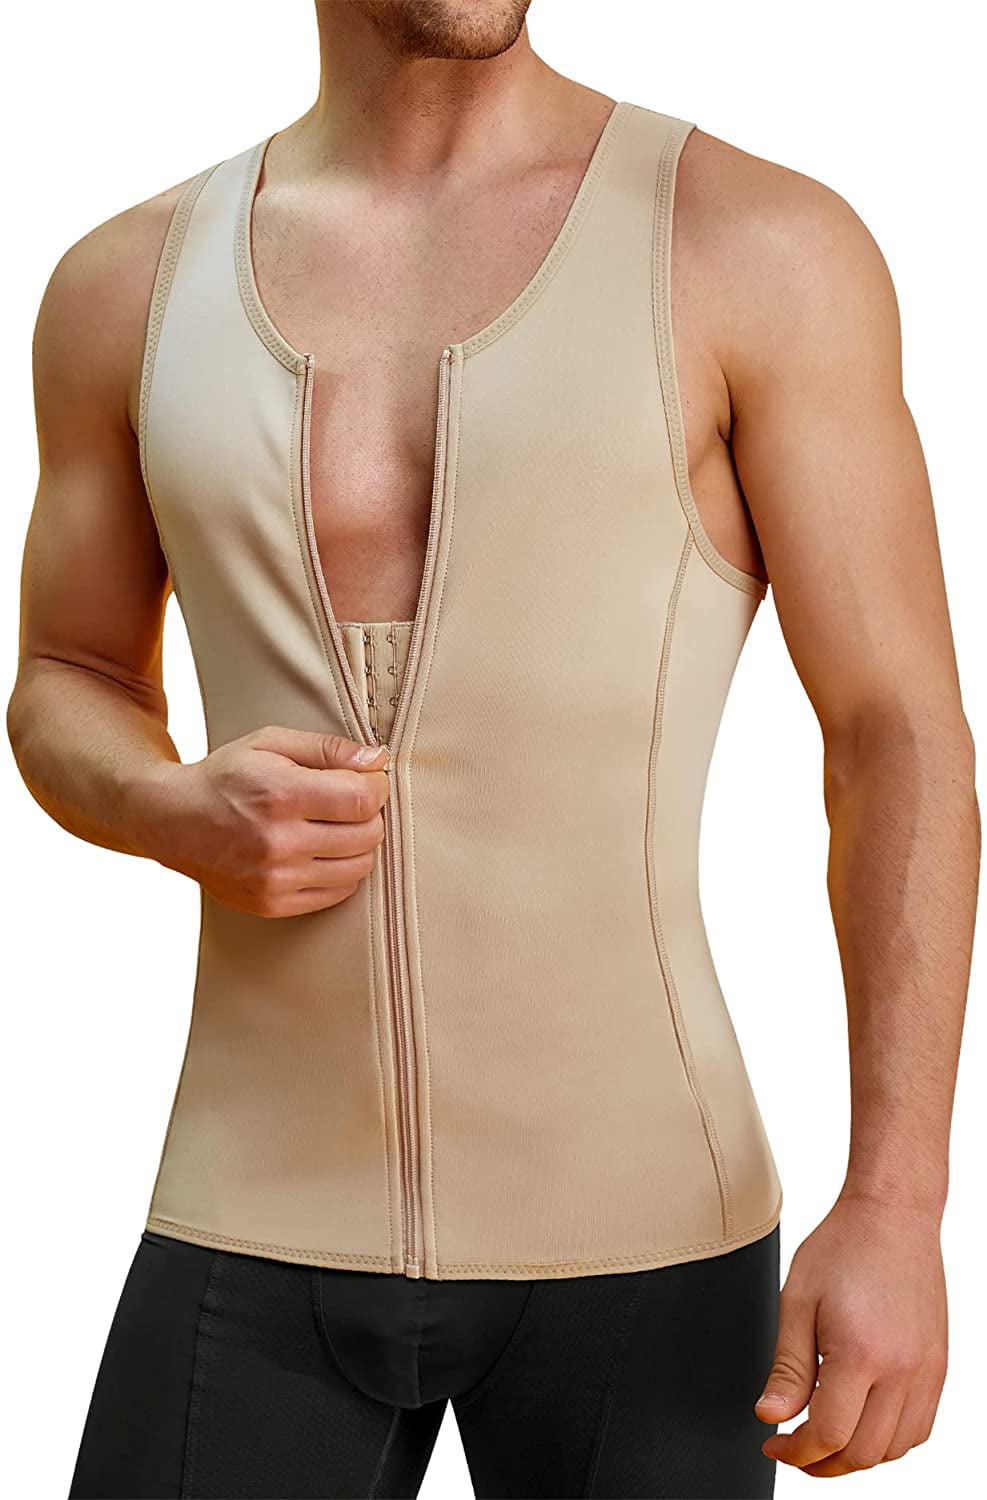 MOLUTAN Mens Compression Shirt Slimming Body Shaper Vest Sleeveless Undershirt Tank Top Tummy Control Shapewear for Men